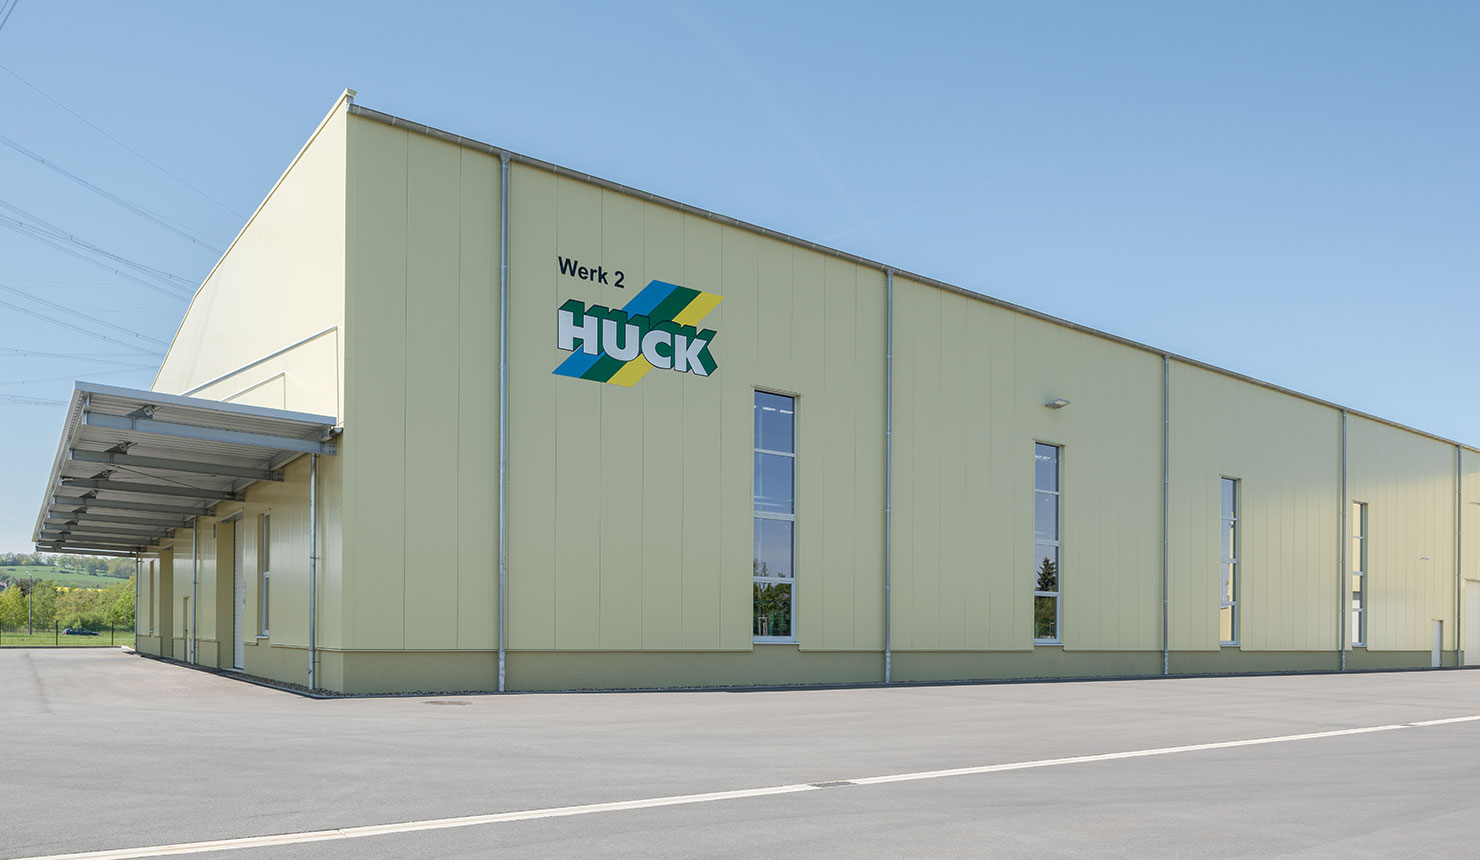 Sächsische Netzwerke Huck GmbH – проект, реализованный Arbonia